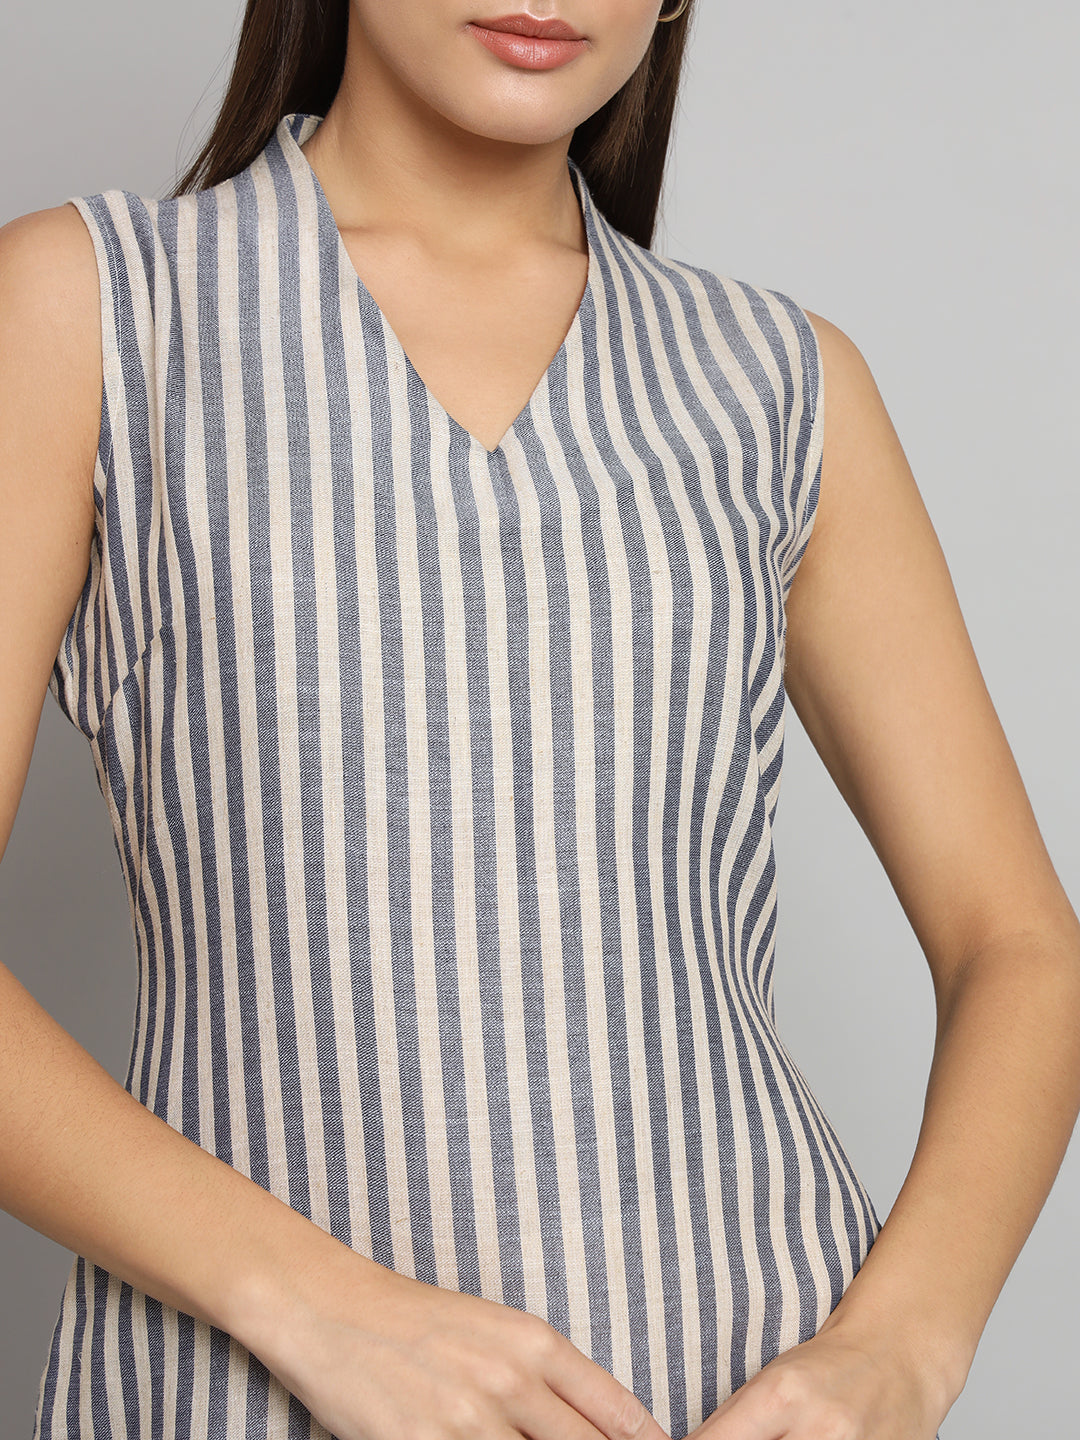 A-line Stripes Poly Linen Dress- Blue and beige